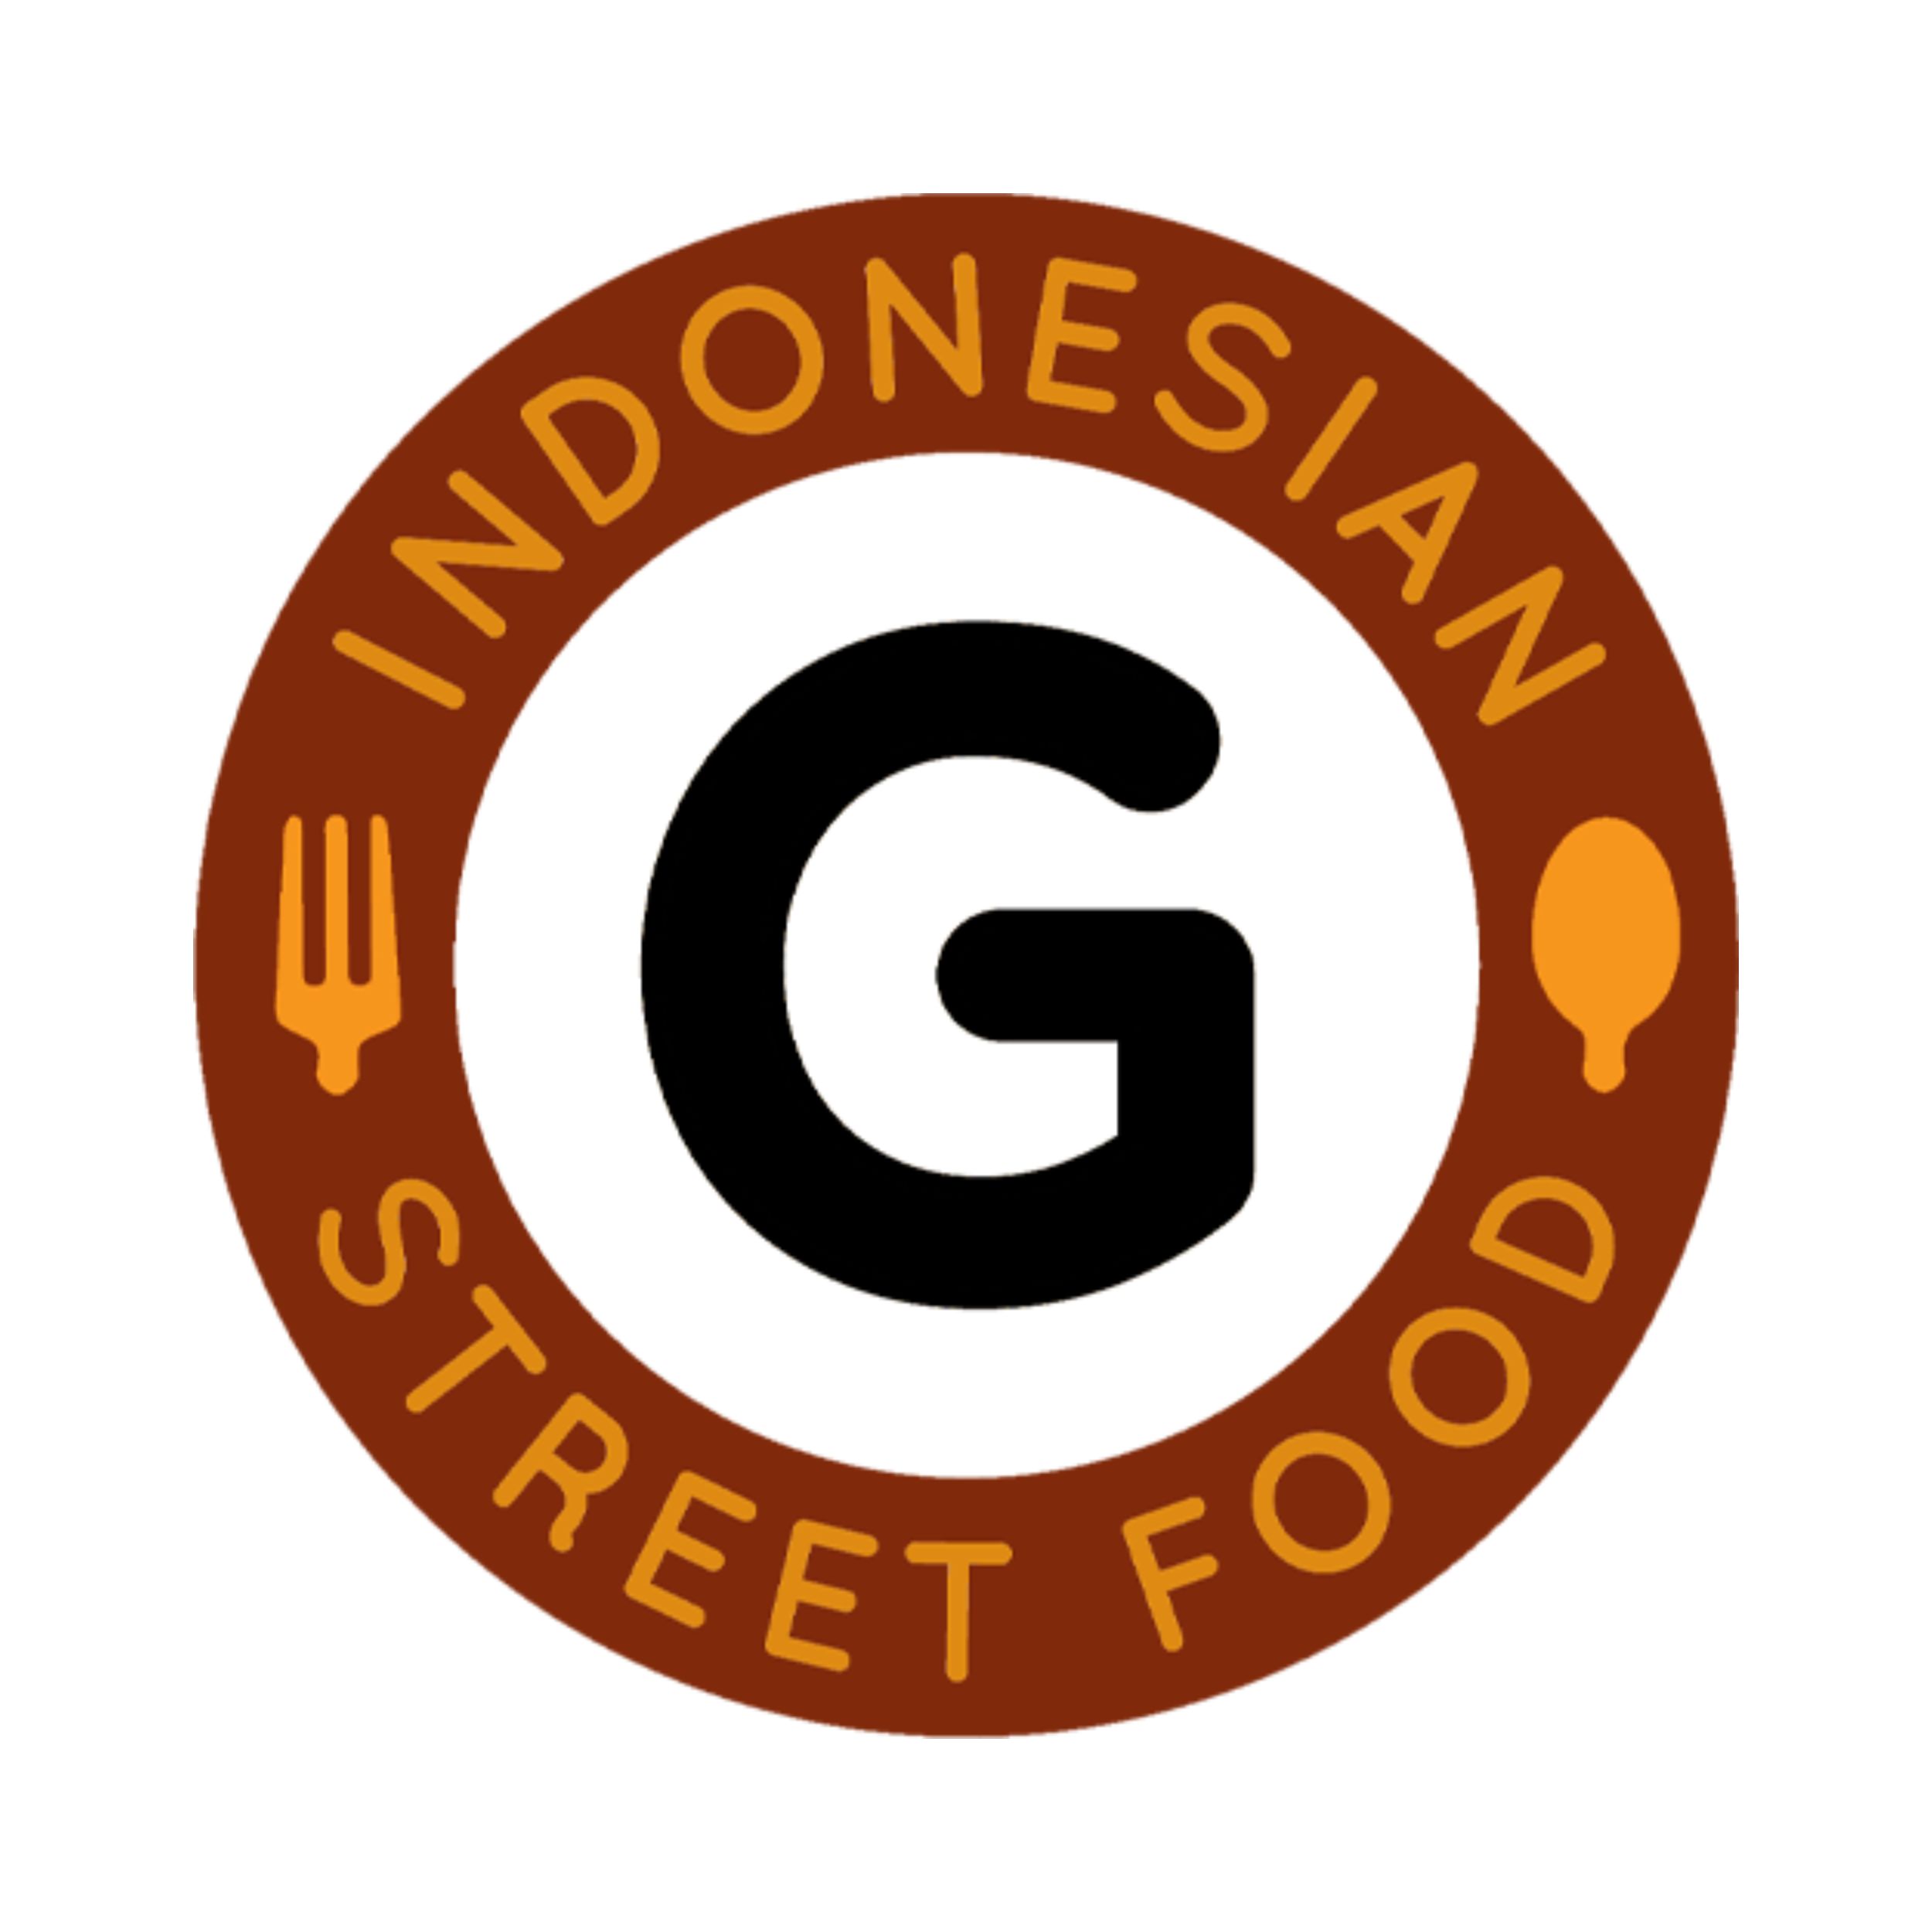 Gading Indonesian Street Food Logo 2500.jpg